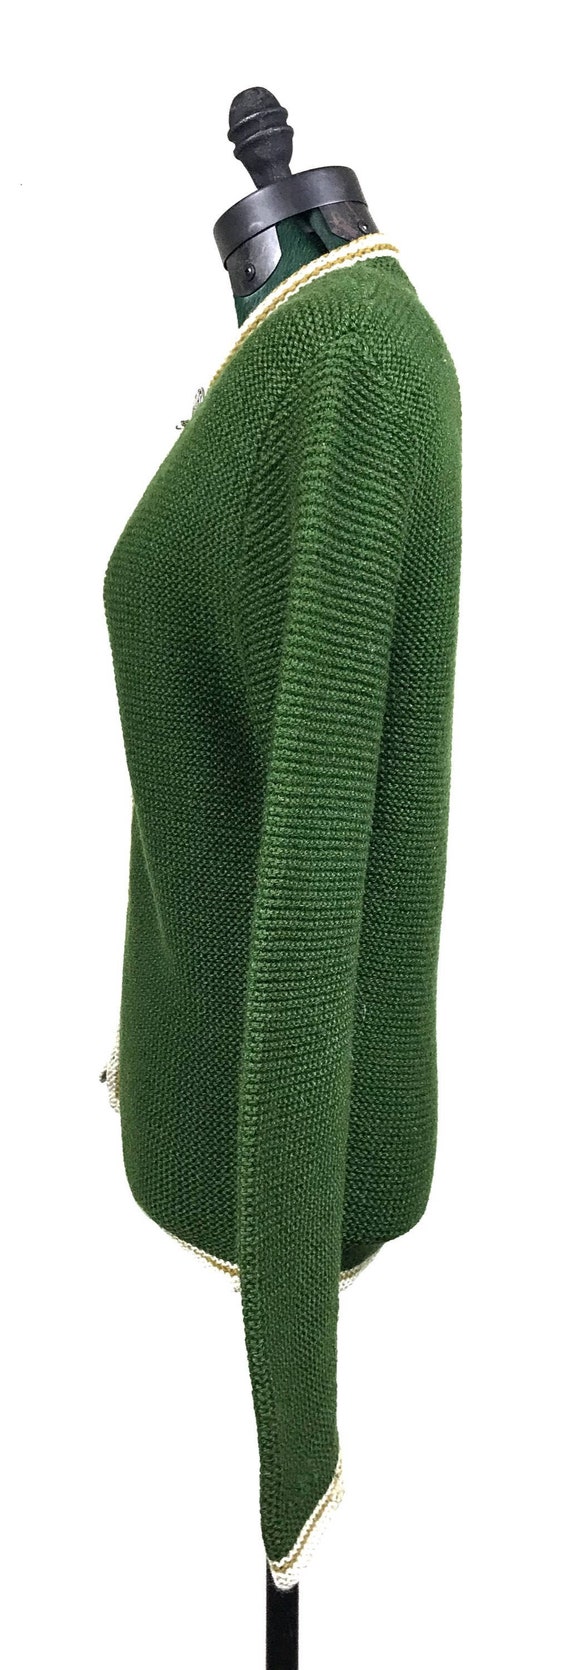 Astri Handarbeit, Green & gold zip up sweater, mad